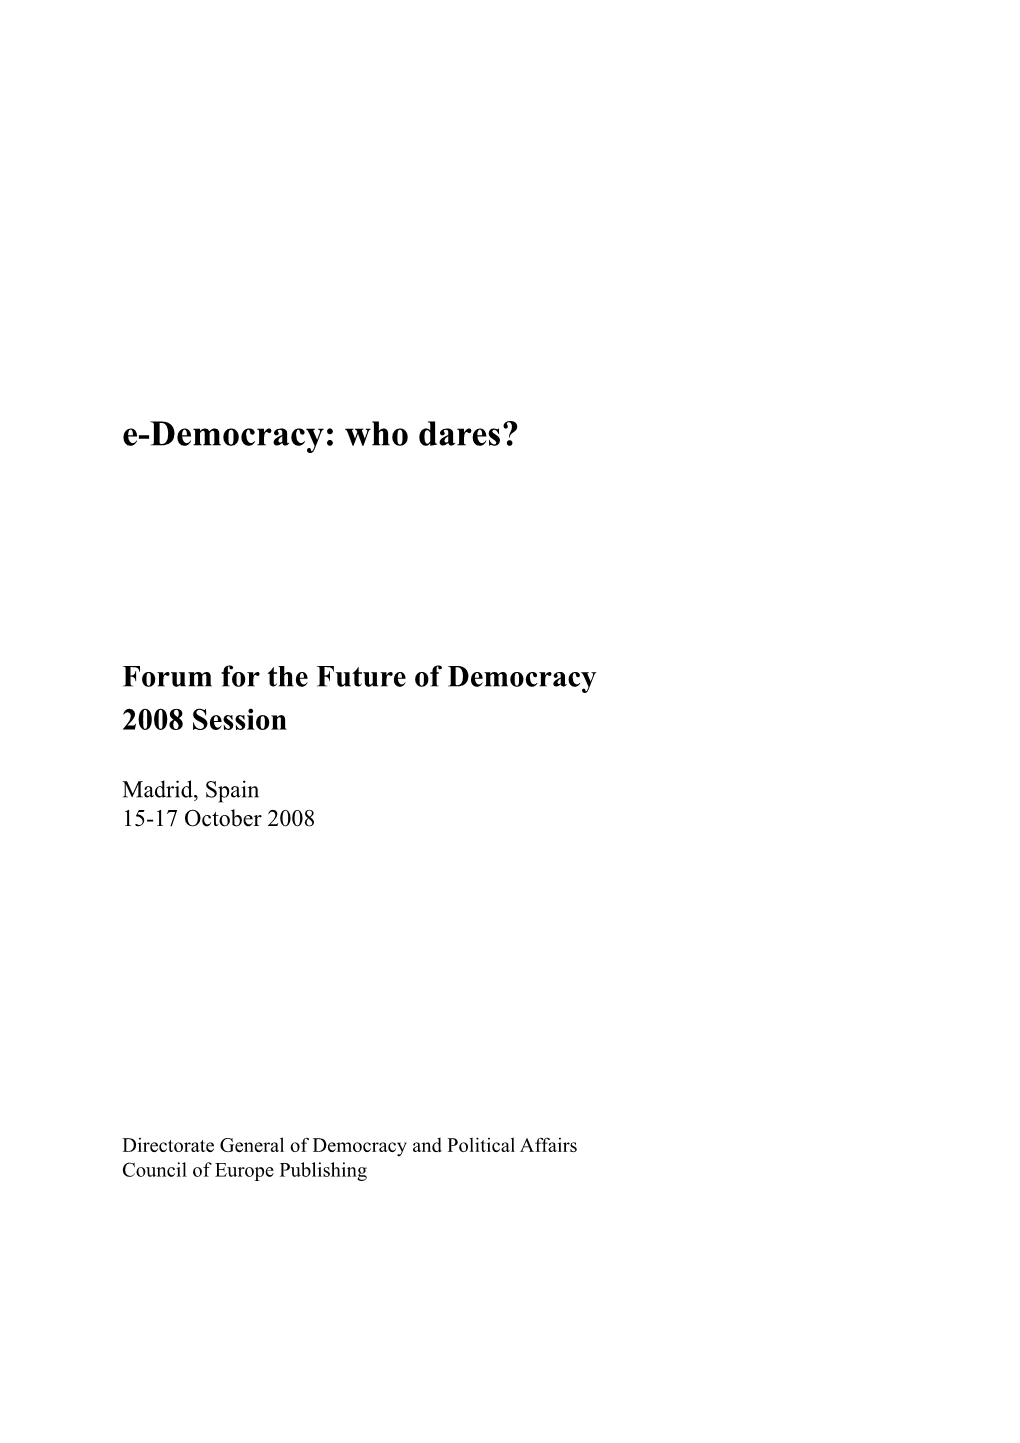 E-Democracy: Who Dares?